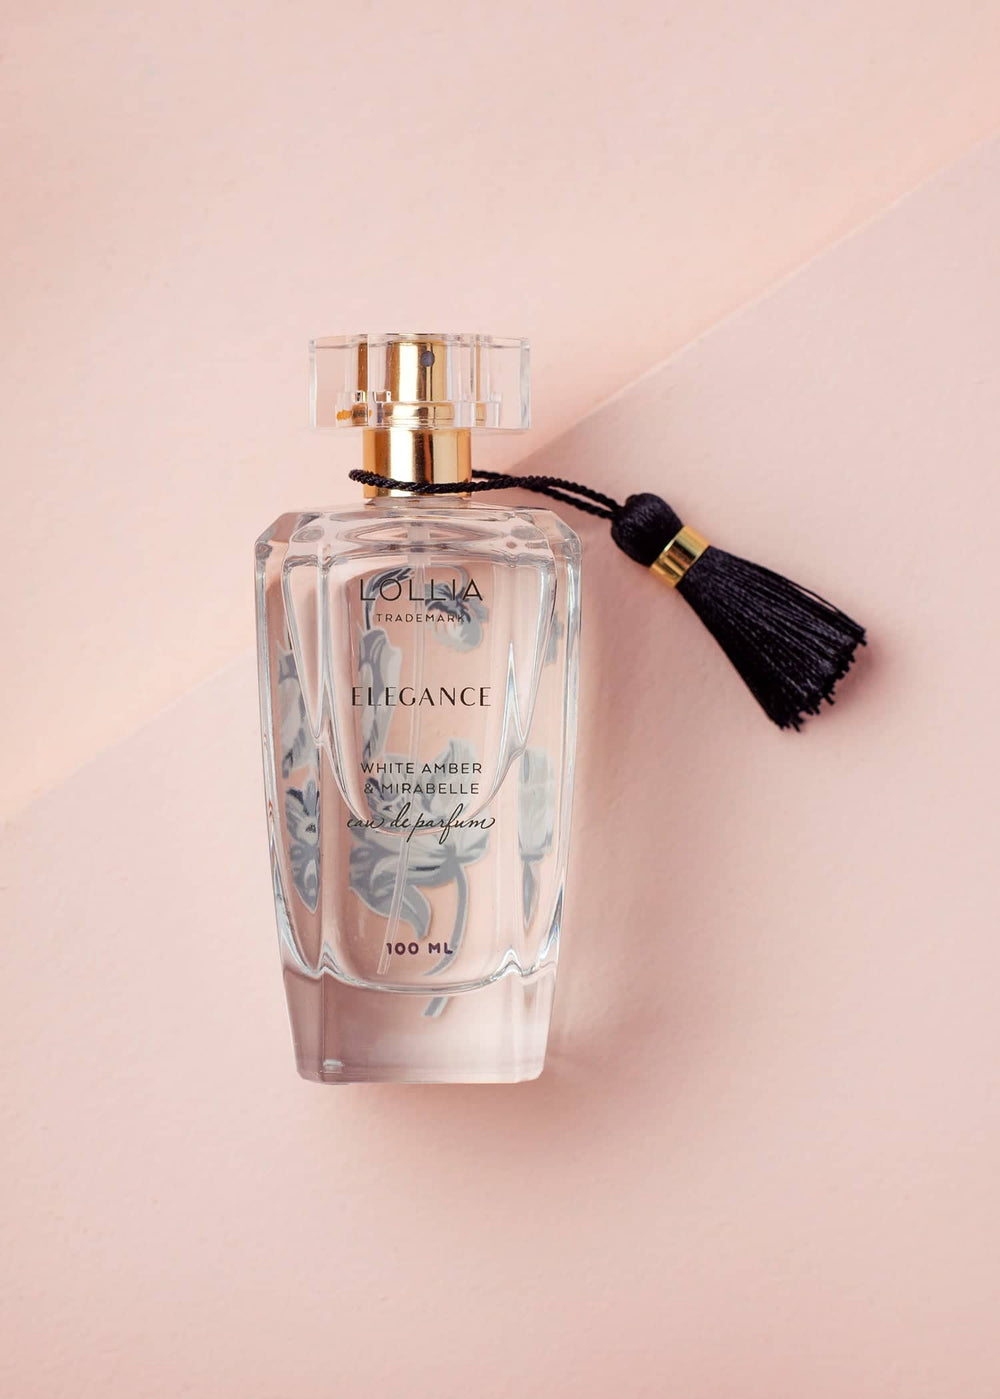 Elegance Perfume by Lollia - Merry Piglets